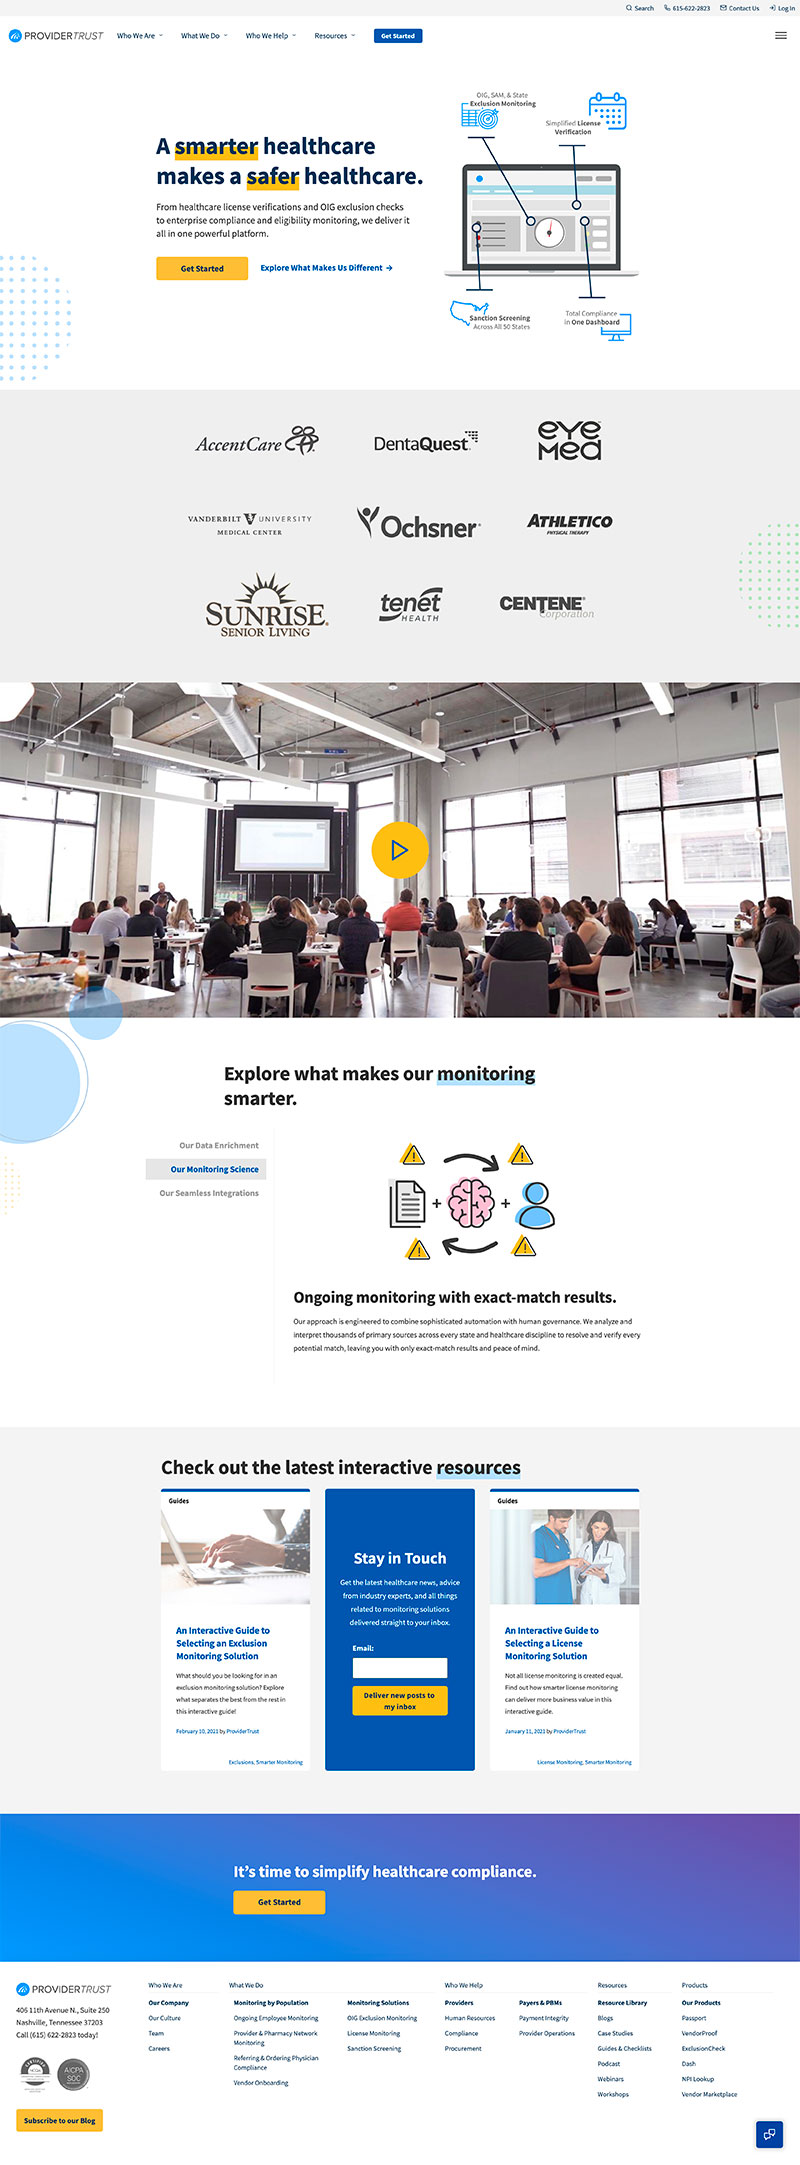 Screenshot of Provider Trust website